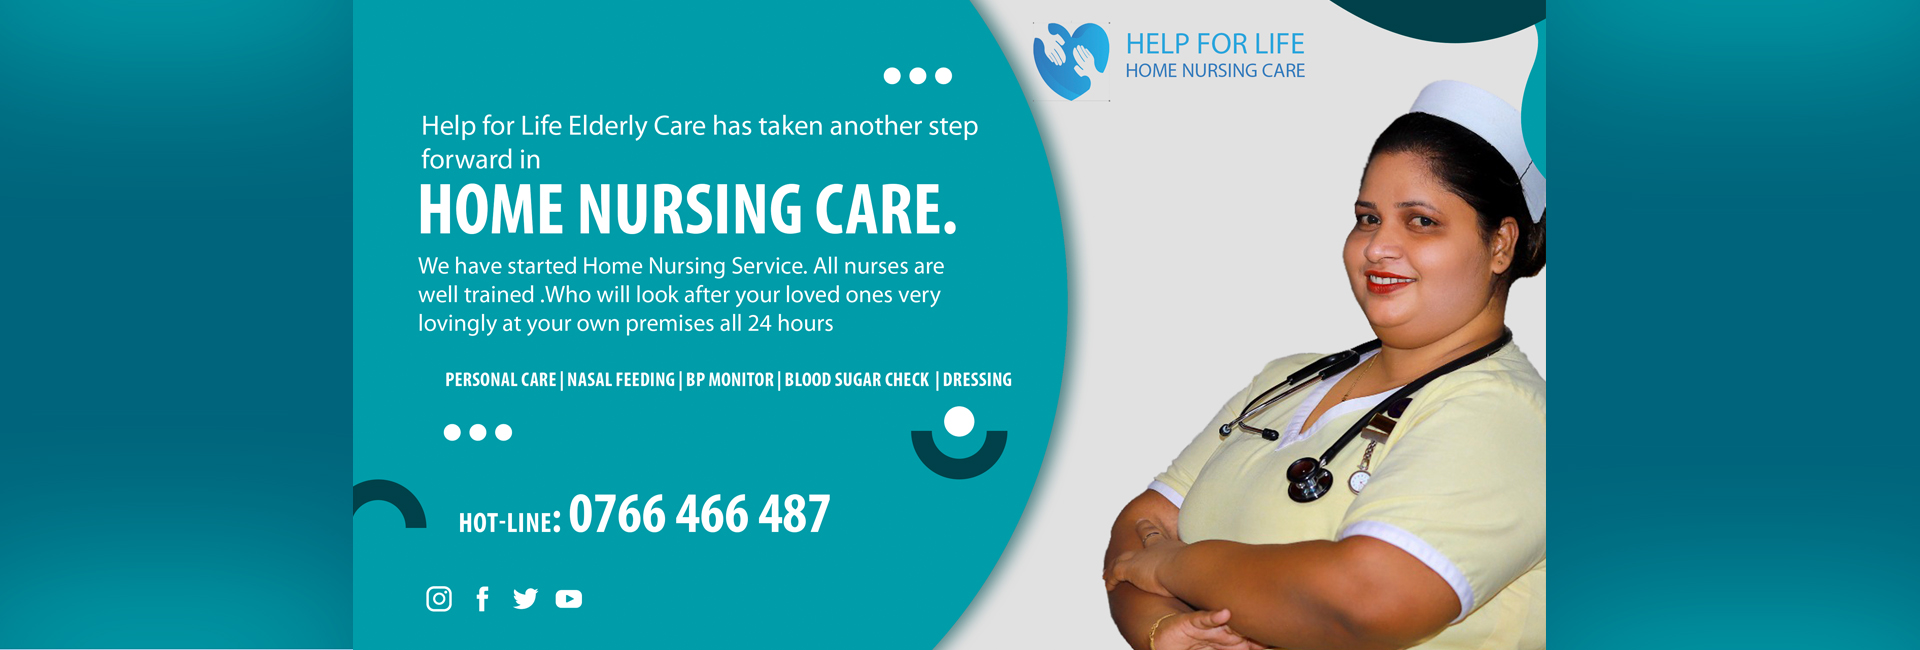 help for life elderly care home main slide image